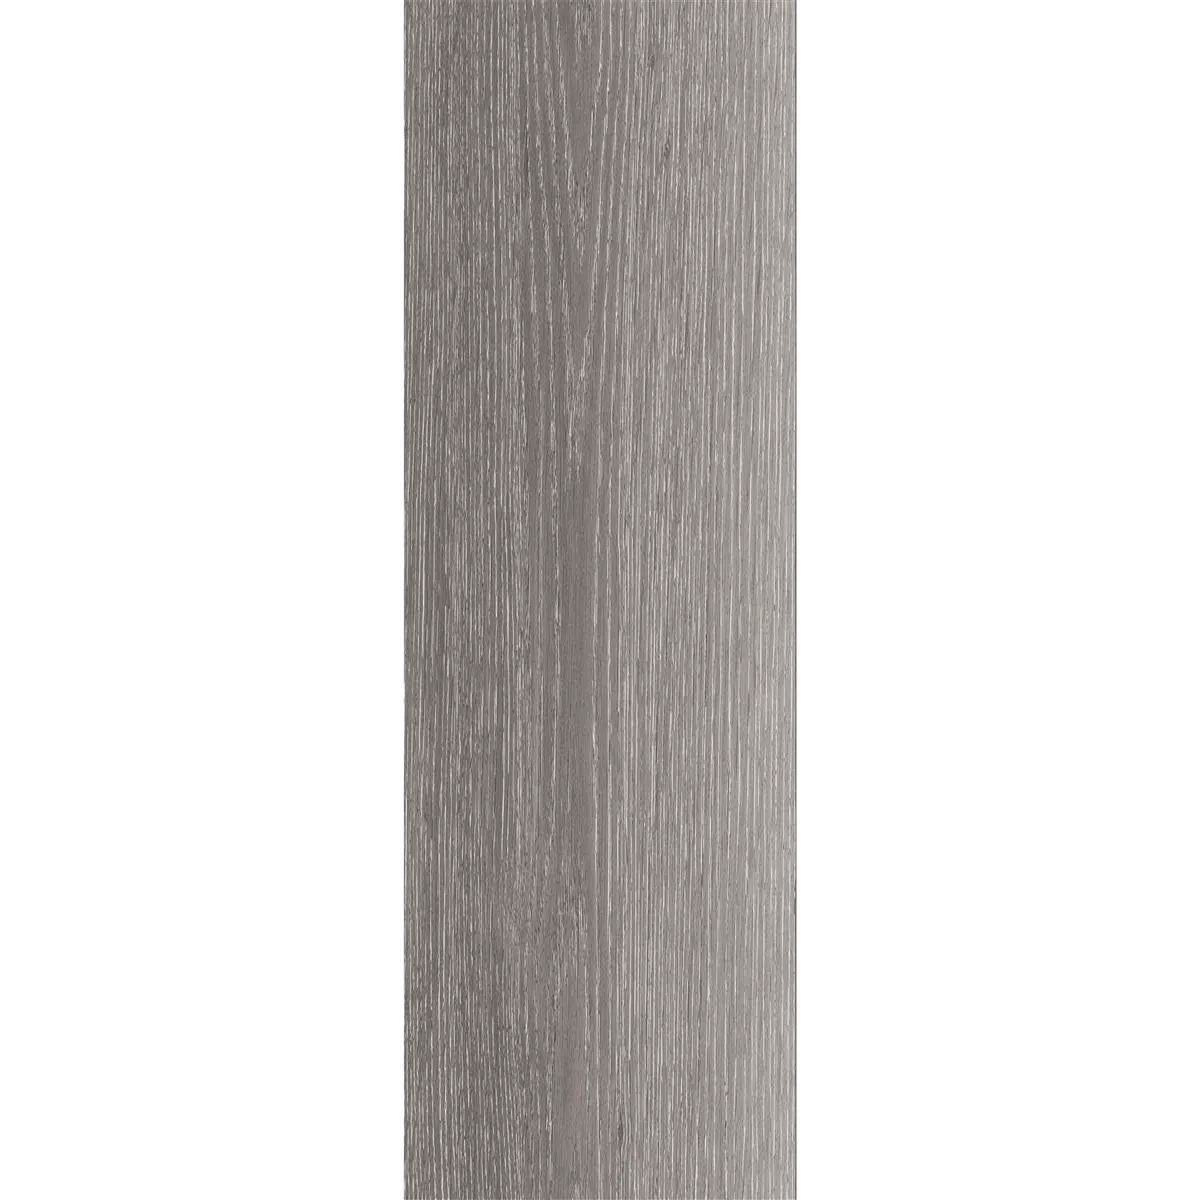 Vinylboden Klicksystem Woodburn Grau 17,2x121cm